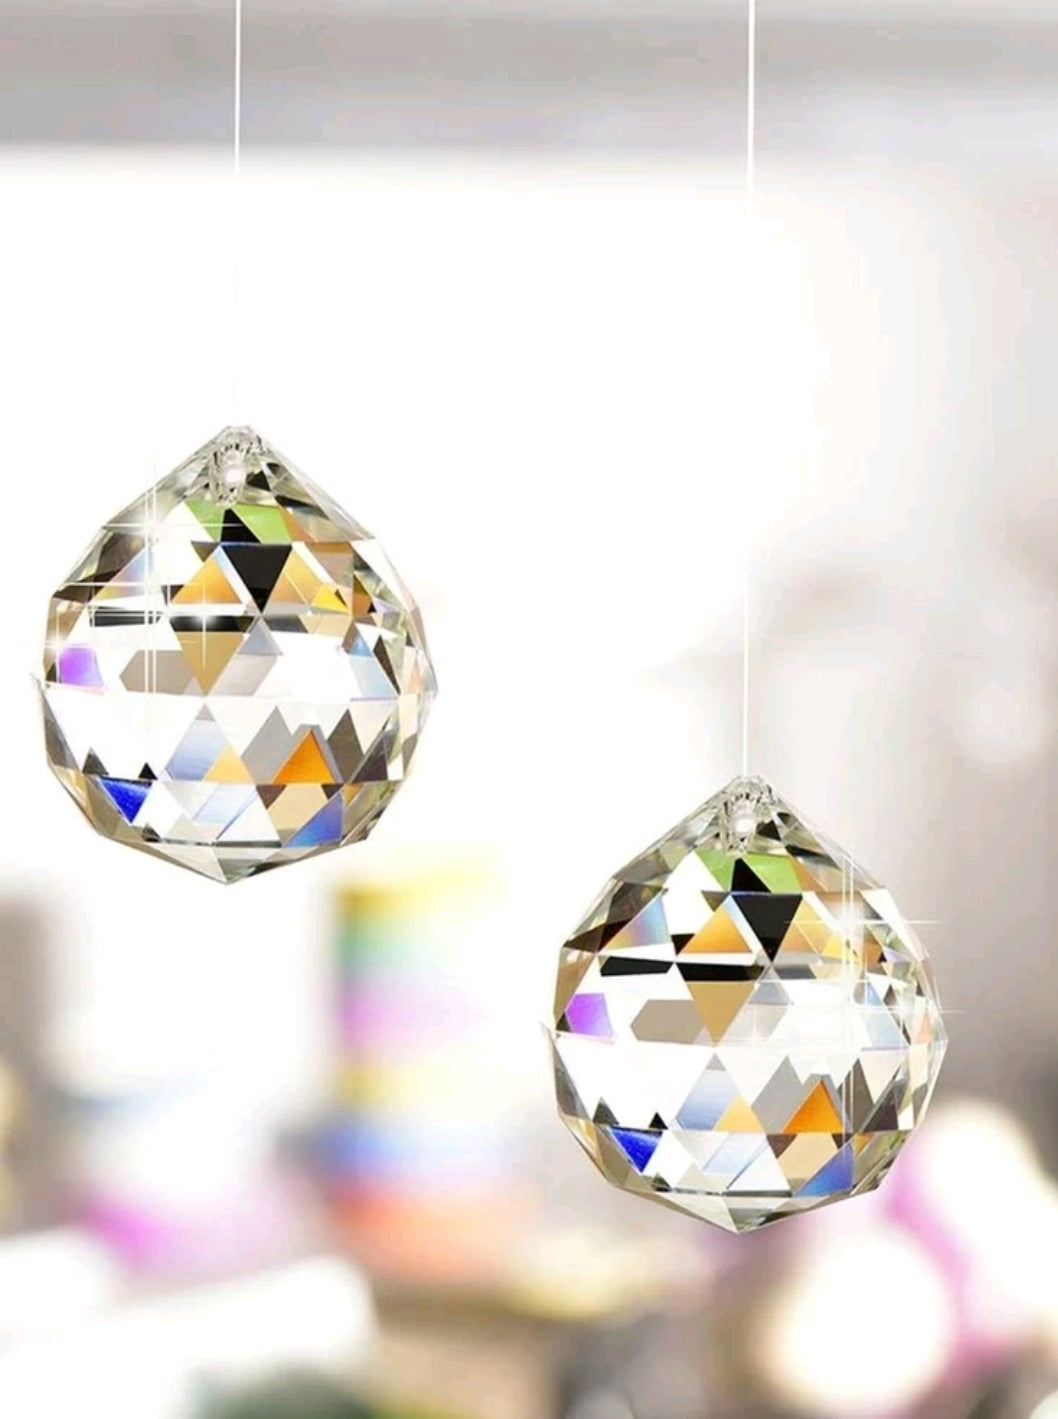 '2 Decorative Crystal Pendants' A pair of teardrop crystal glass almond shape fine chic pendant decorative jewellery-bijoux lighting craft decor. Color: Clear Material: Hard Plastic Size: Length 3cm (1.2 inch) X Width 3 cm (1.2 inch)